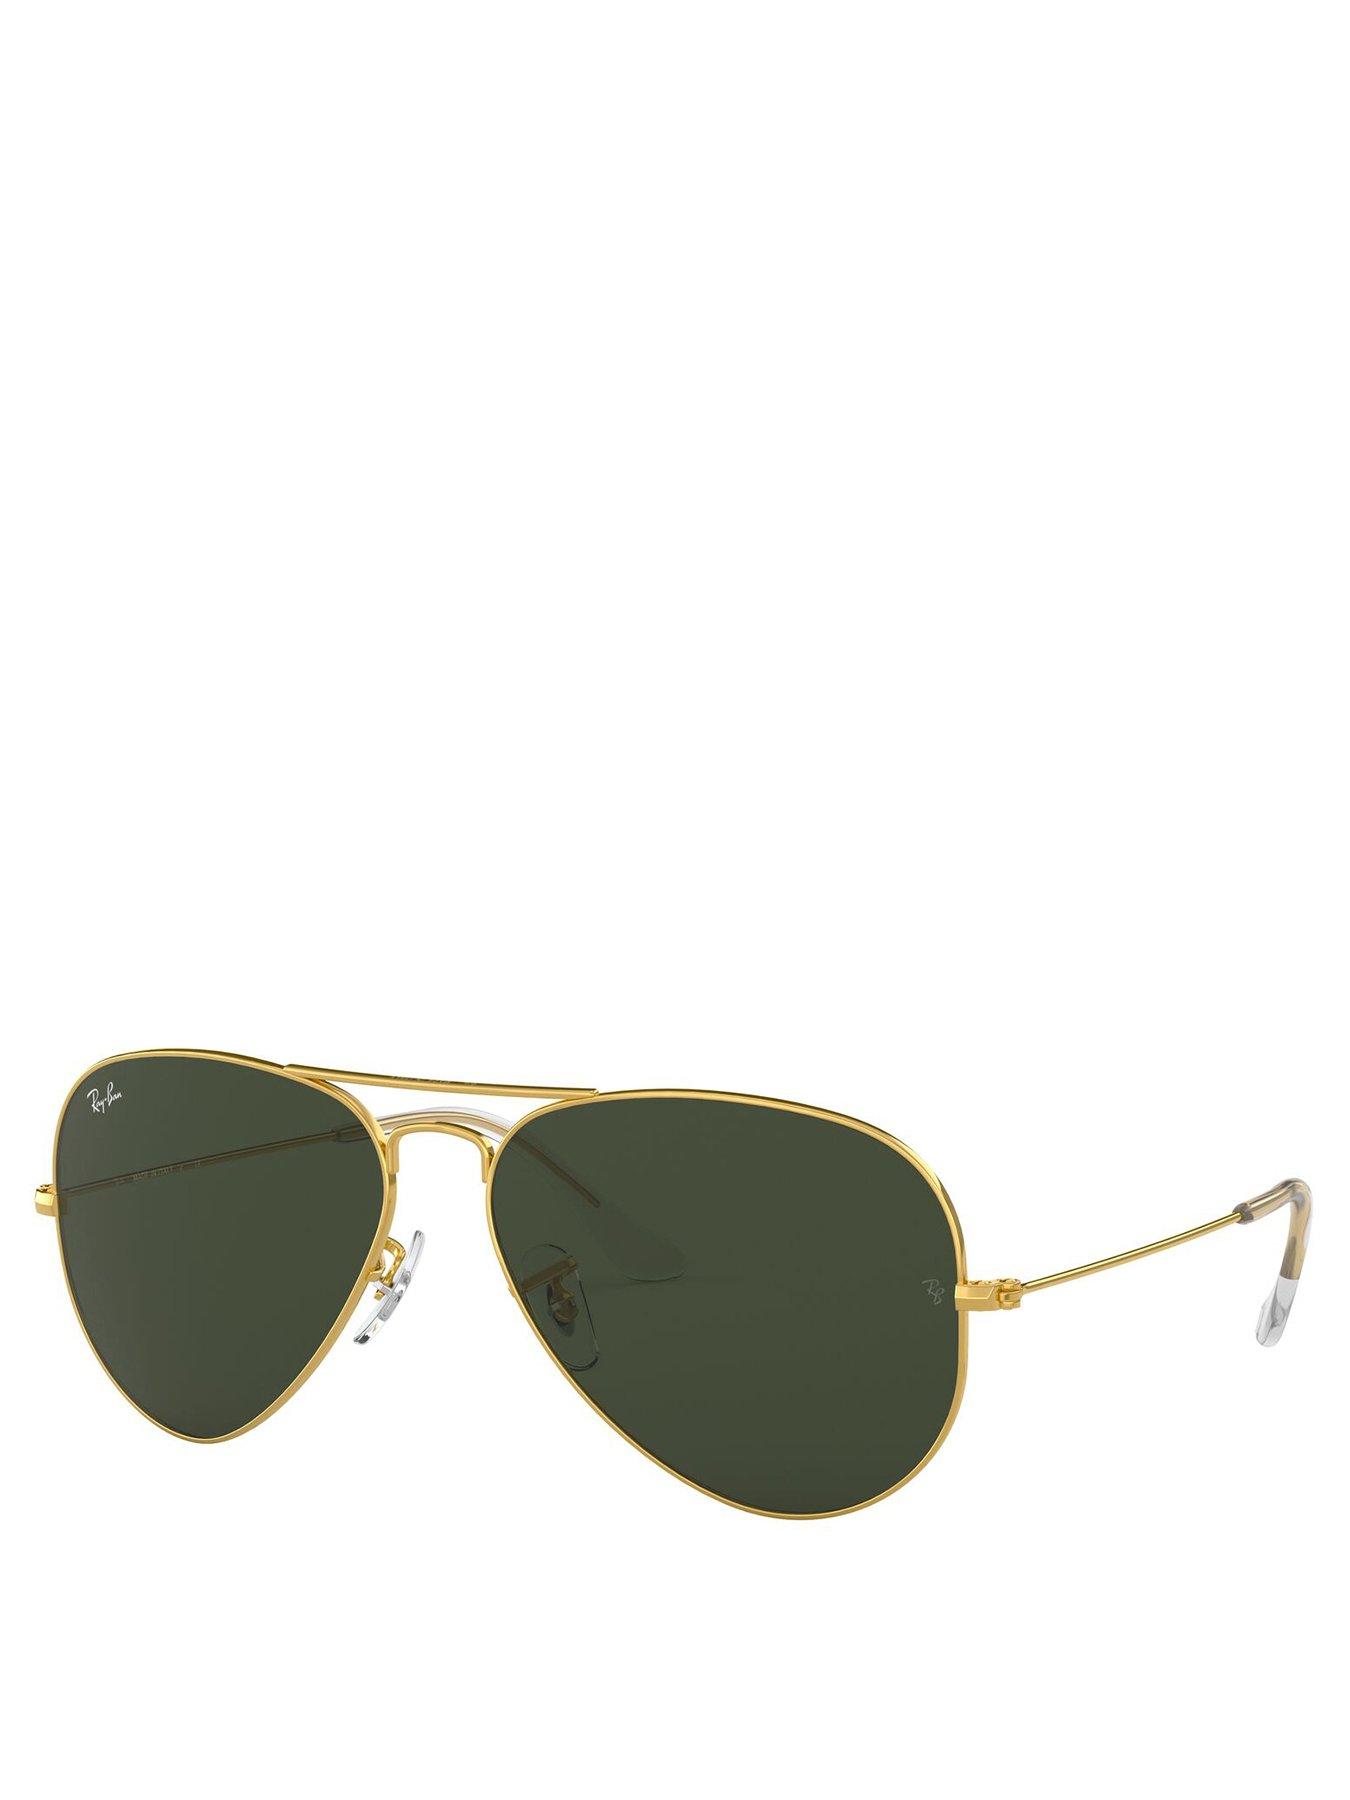 Ray-Ban Aviator Metal Frame Green Lens Sunglasses - Gold | very.co.uk